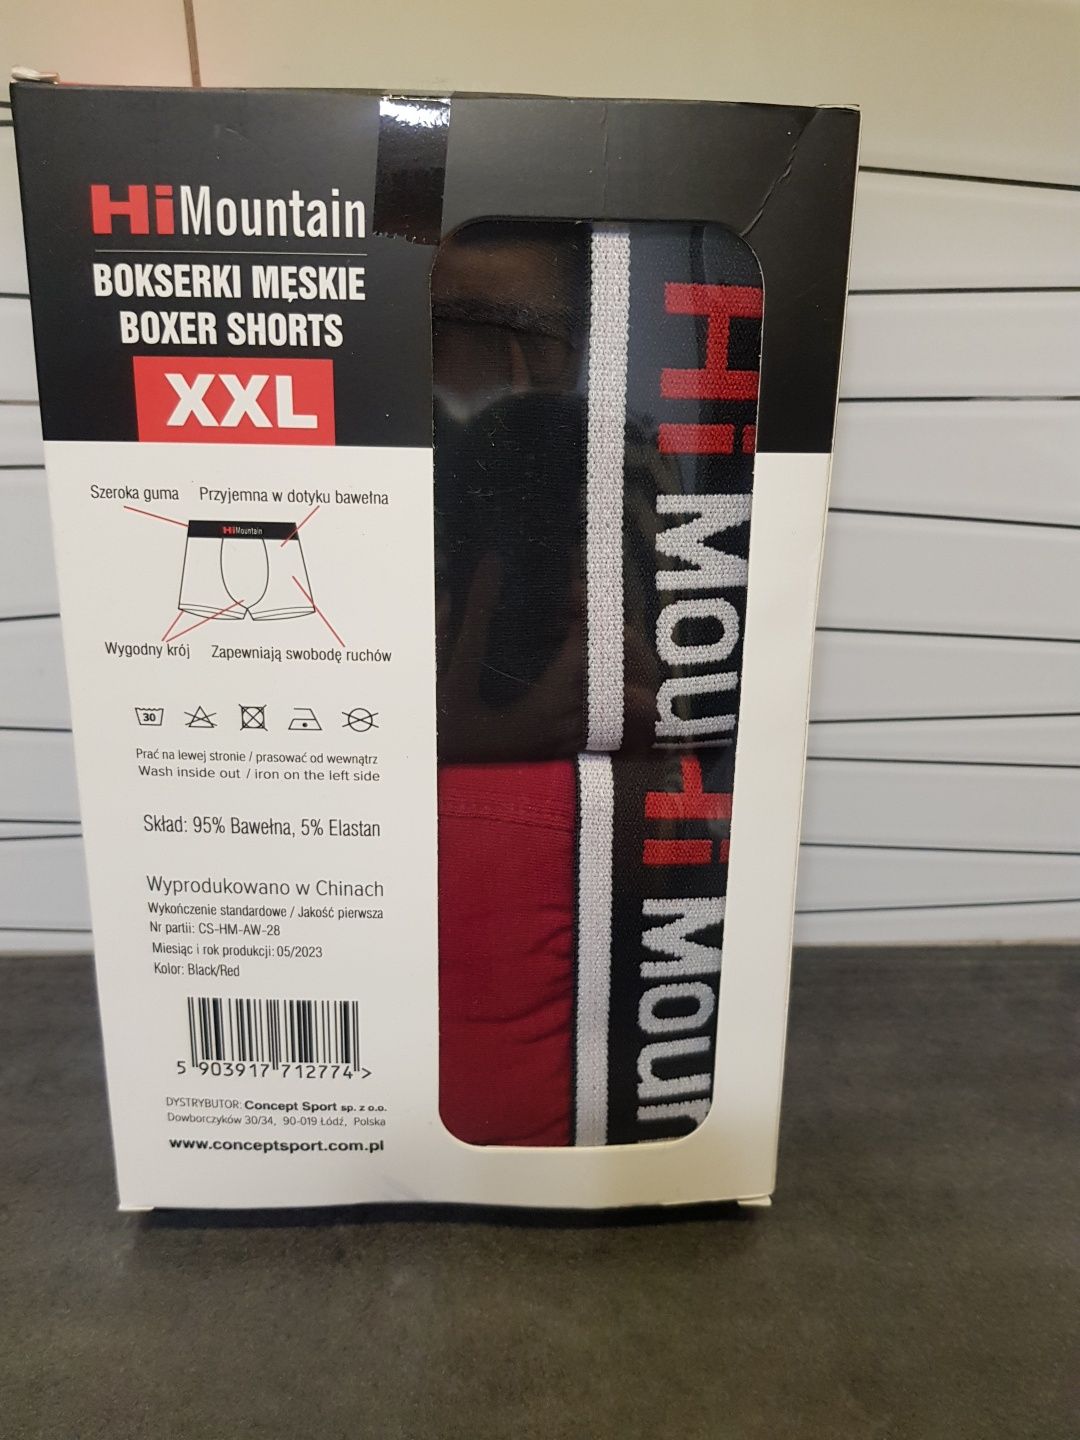 Hi Mountain Bokserki 2 pack XXL czarne/czerwone